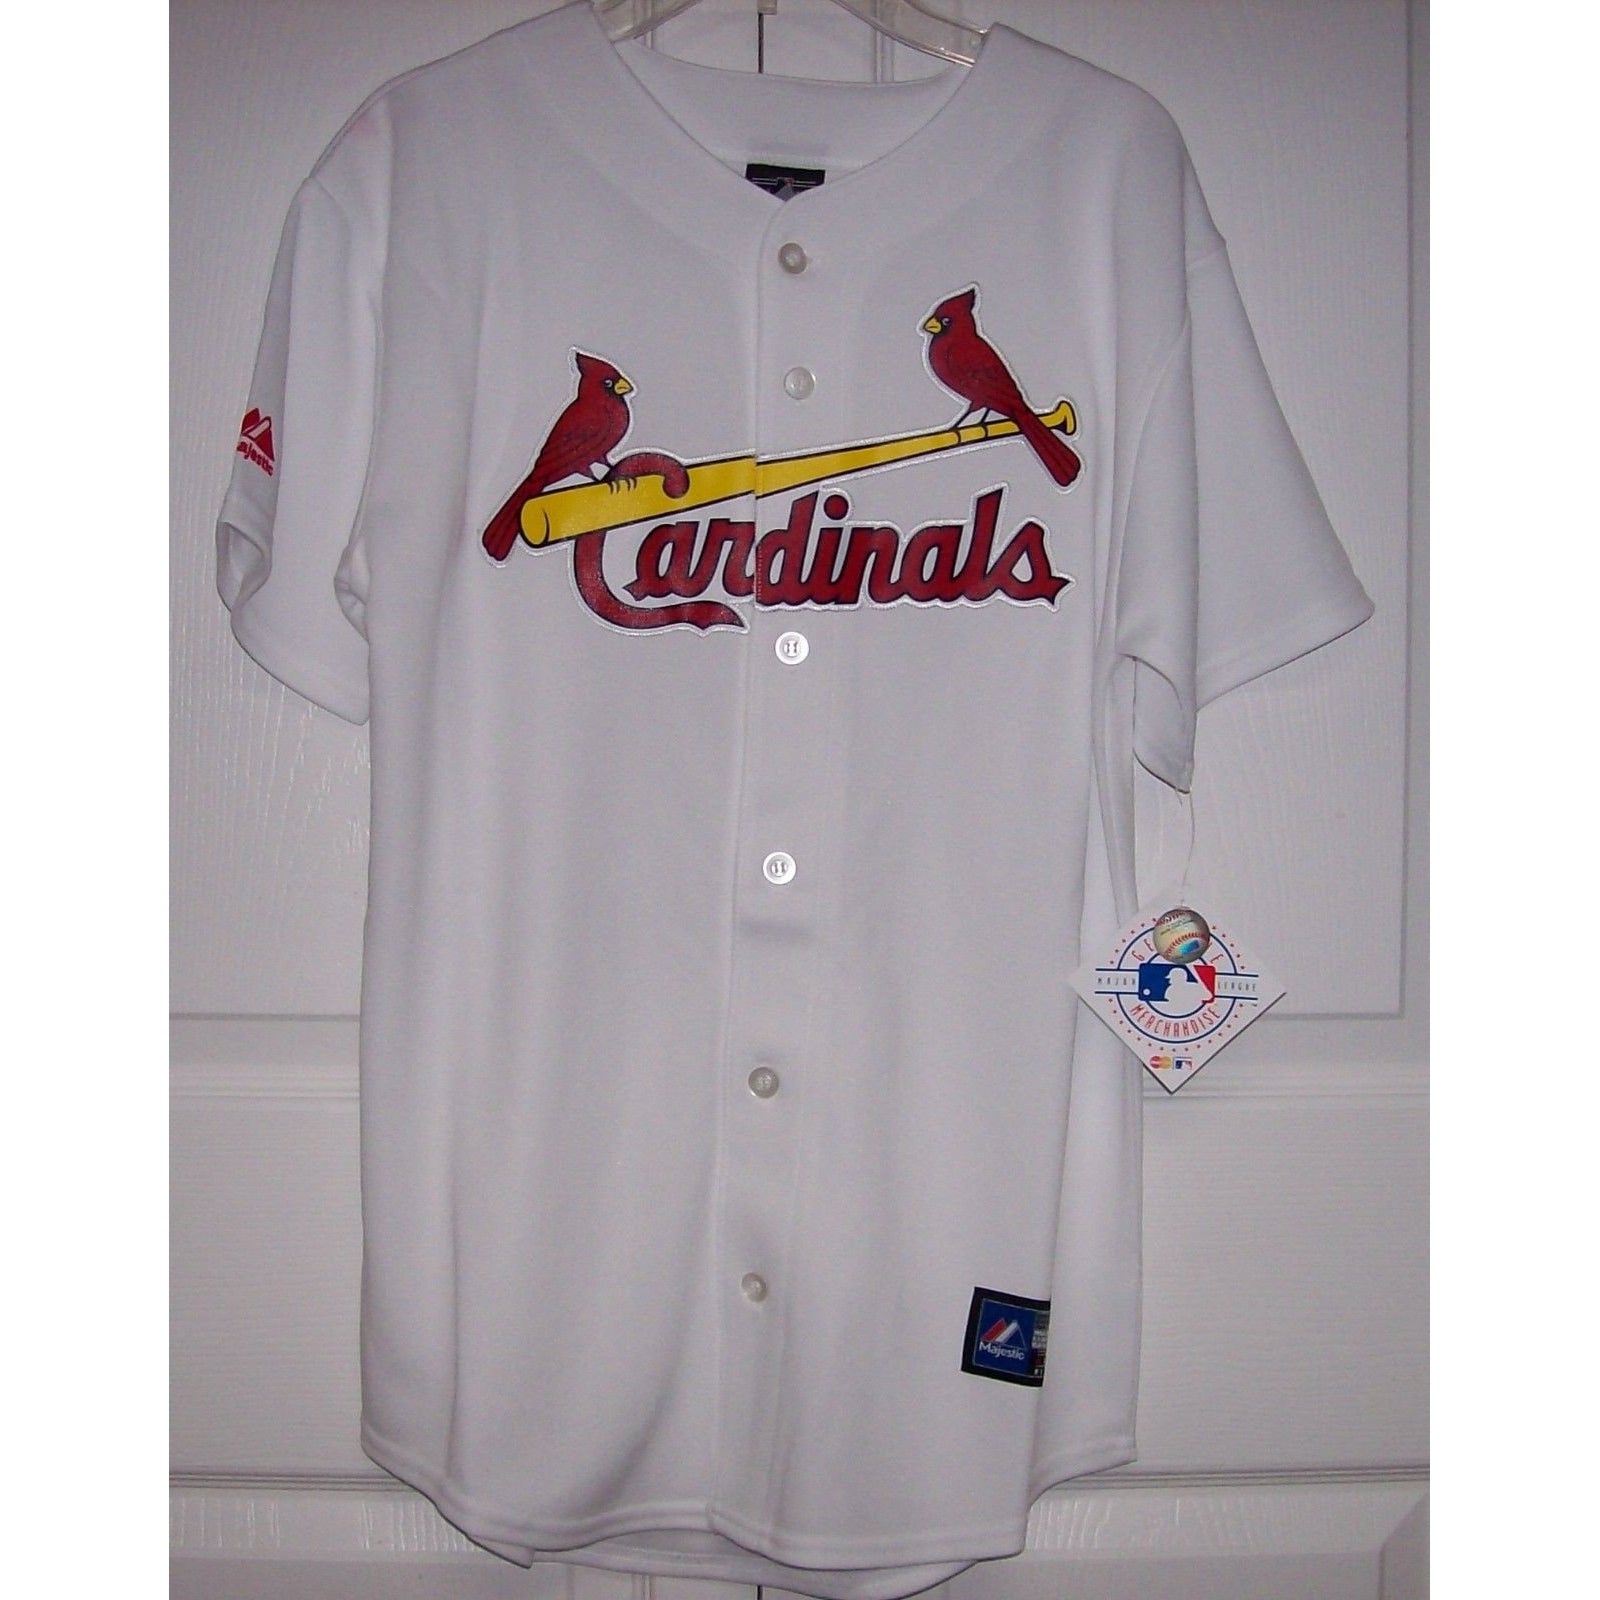 St. Louis Cardinals - Page 2 of 5 - Cheap MLB Baseball Jerseys